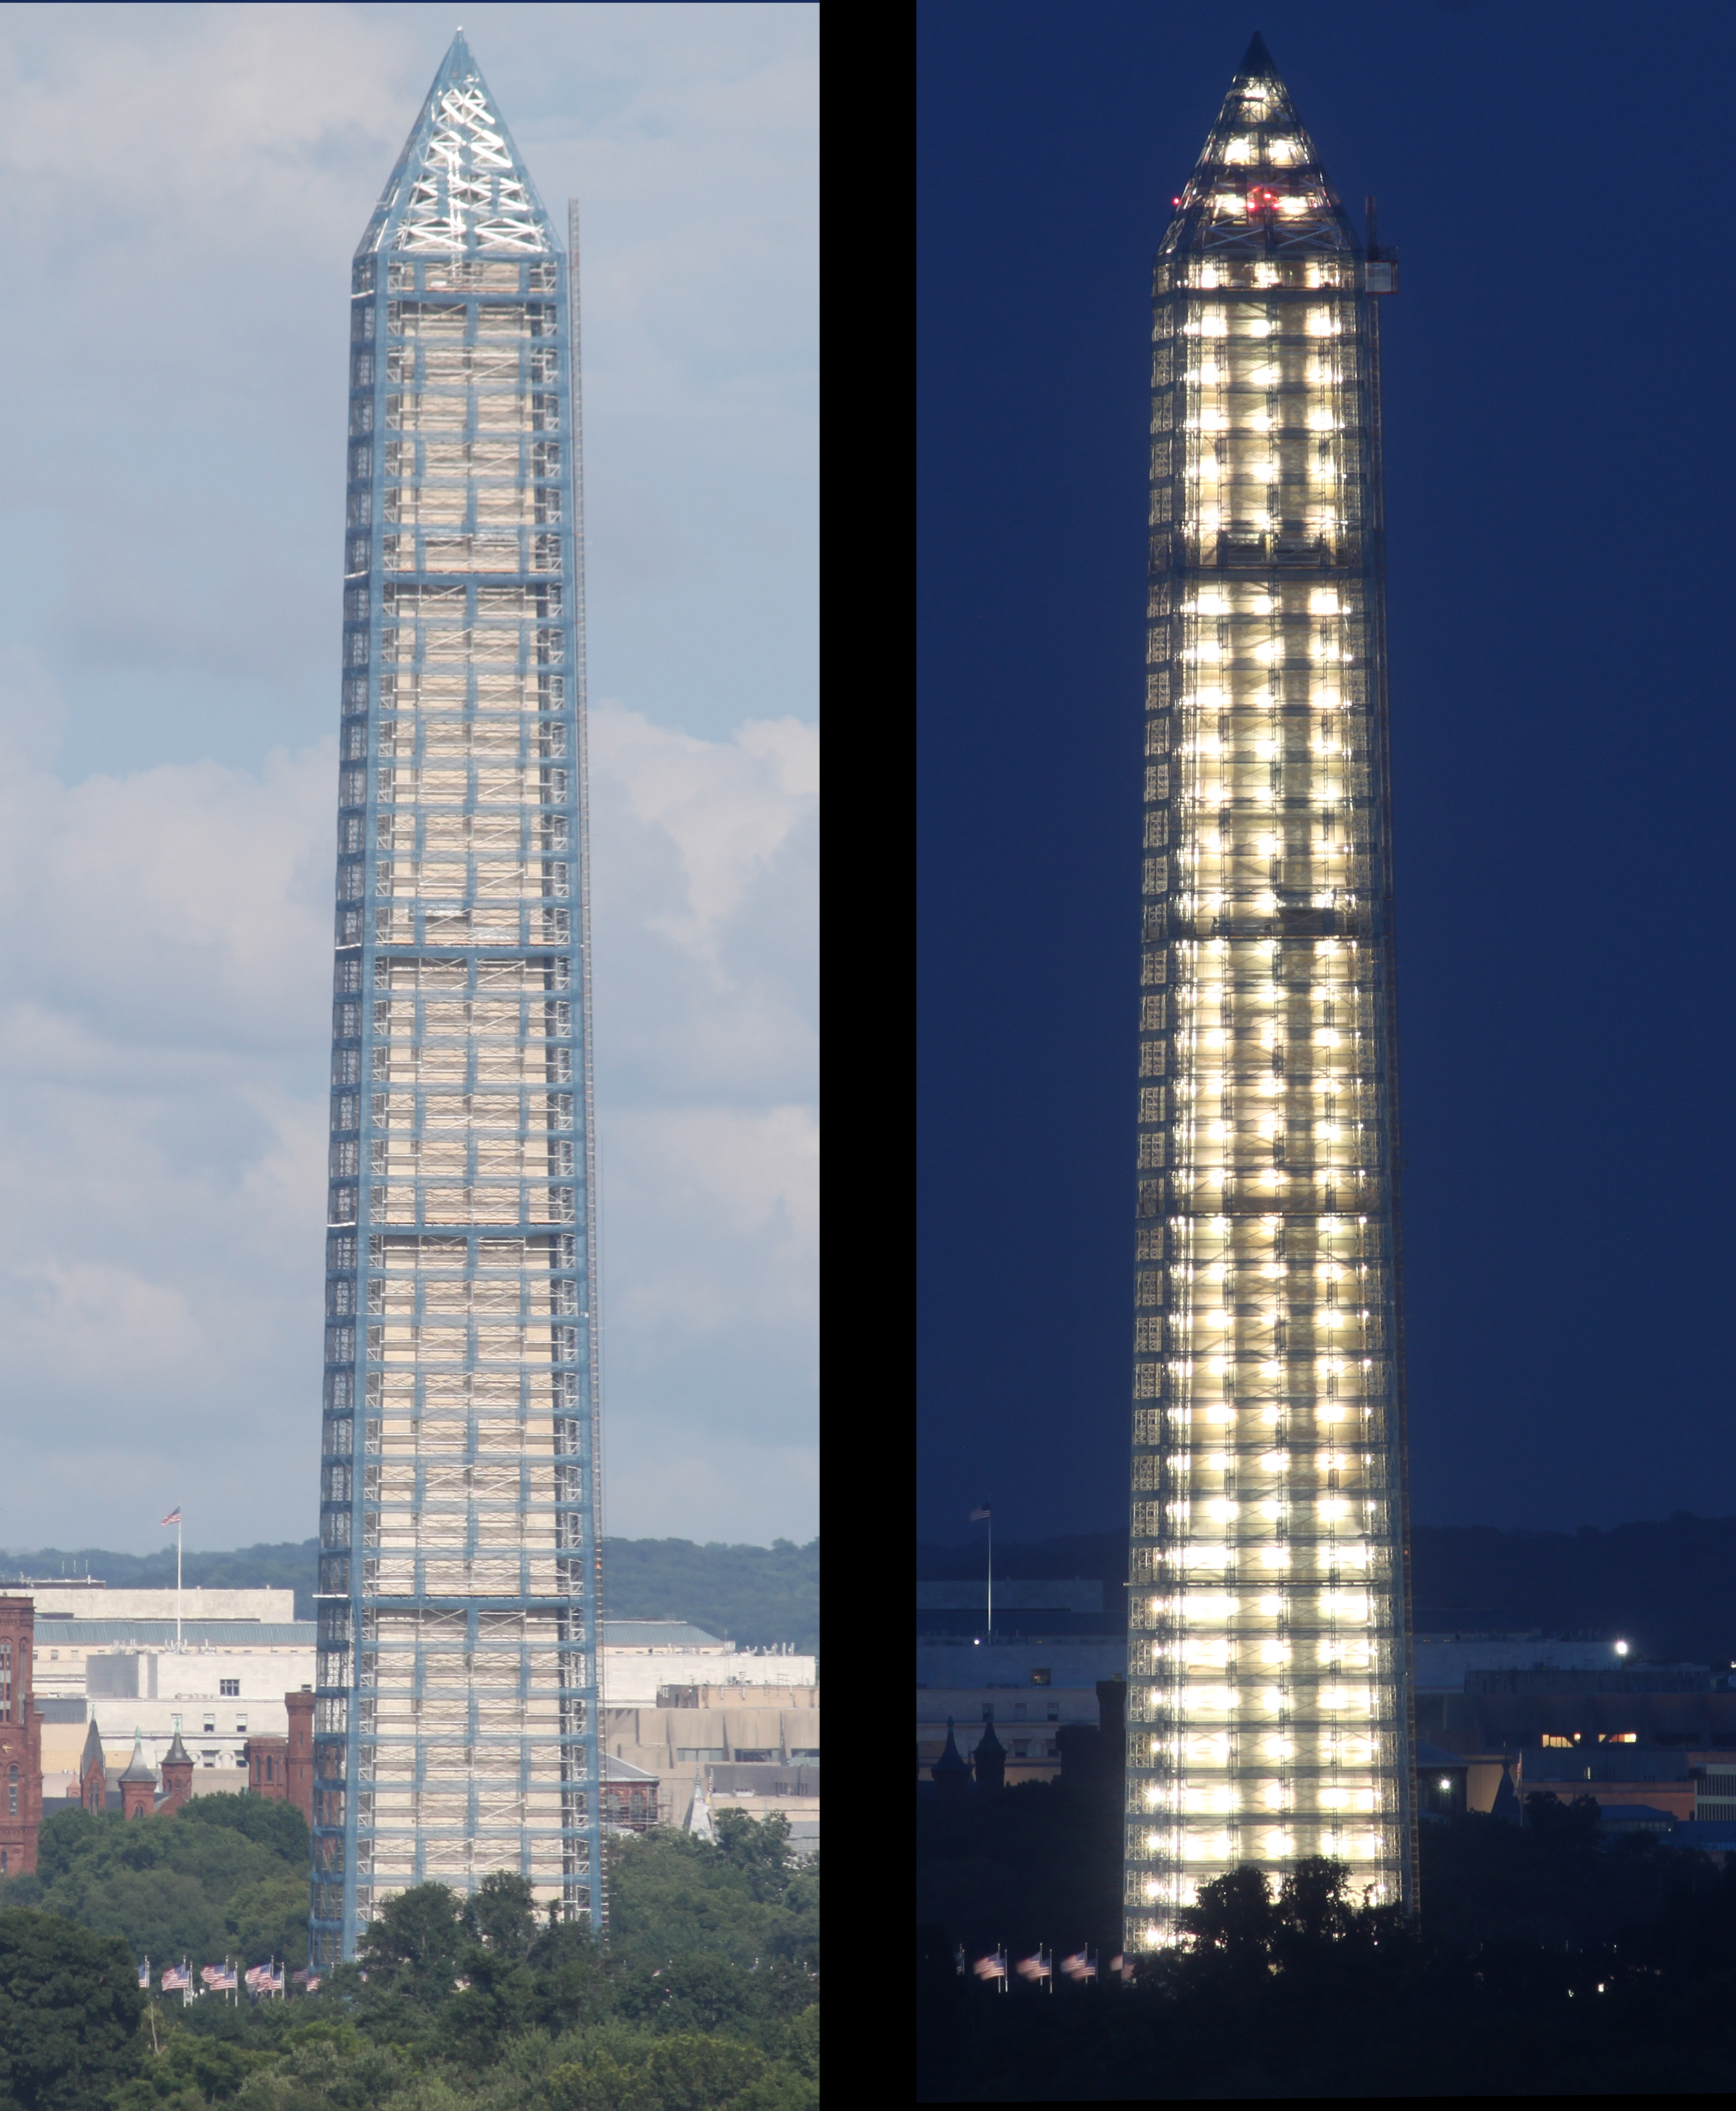 Washington Monument scaffolding (day and night)